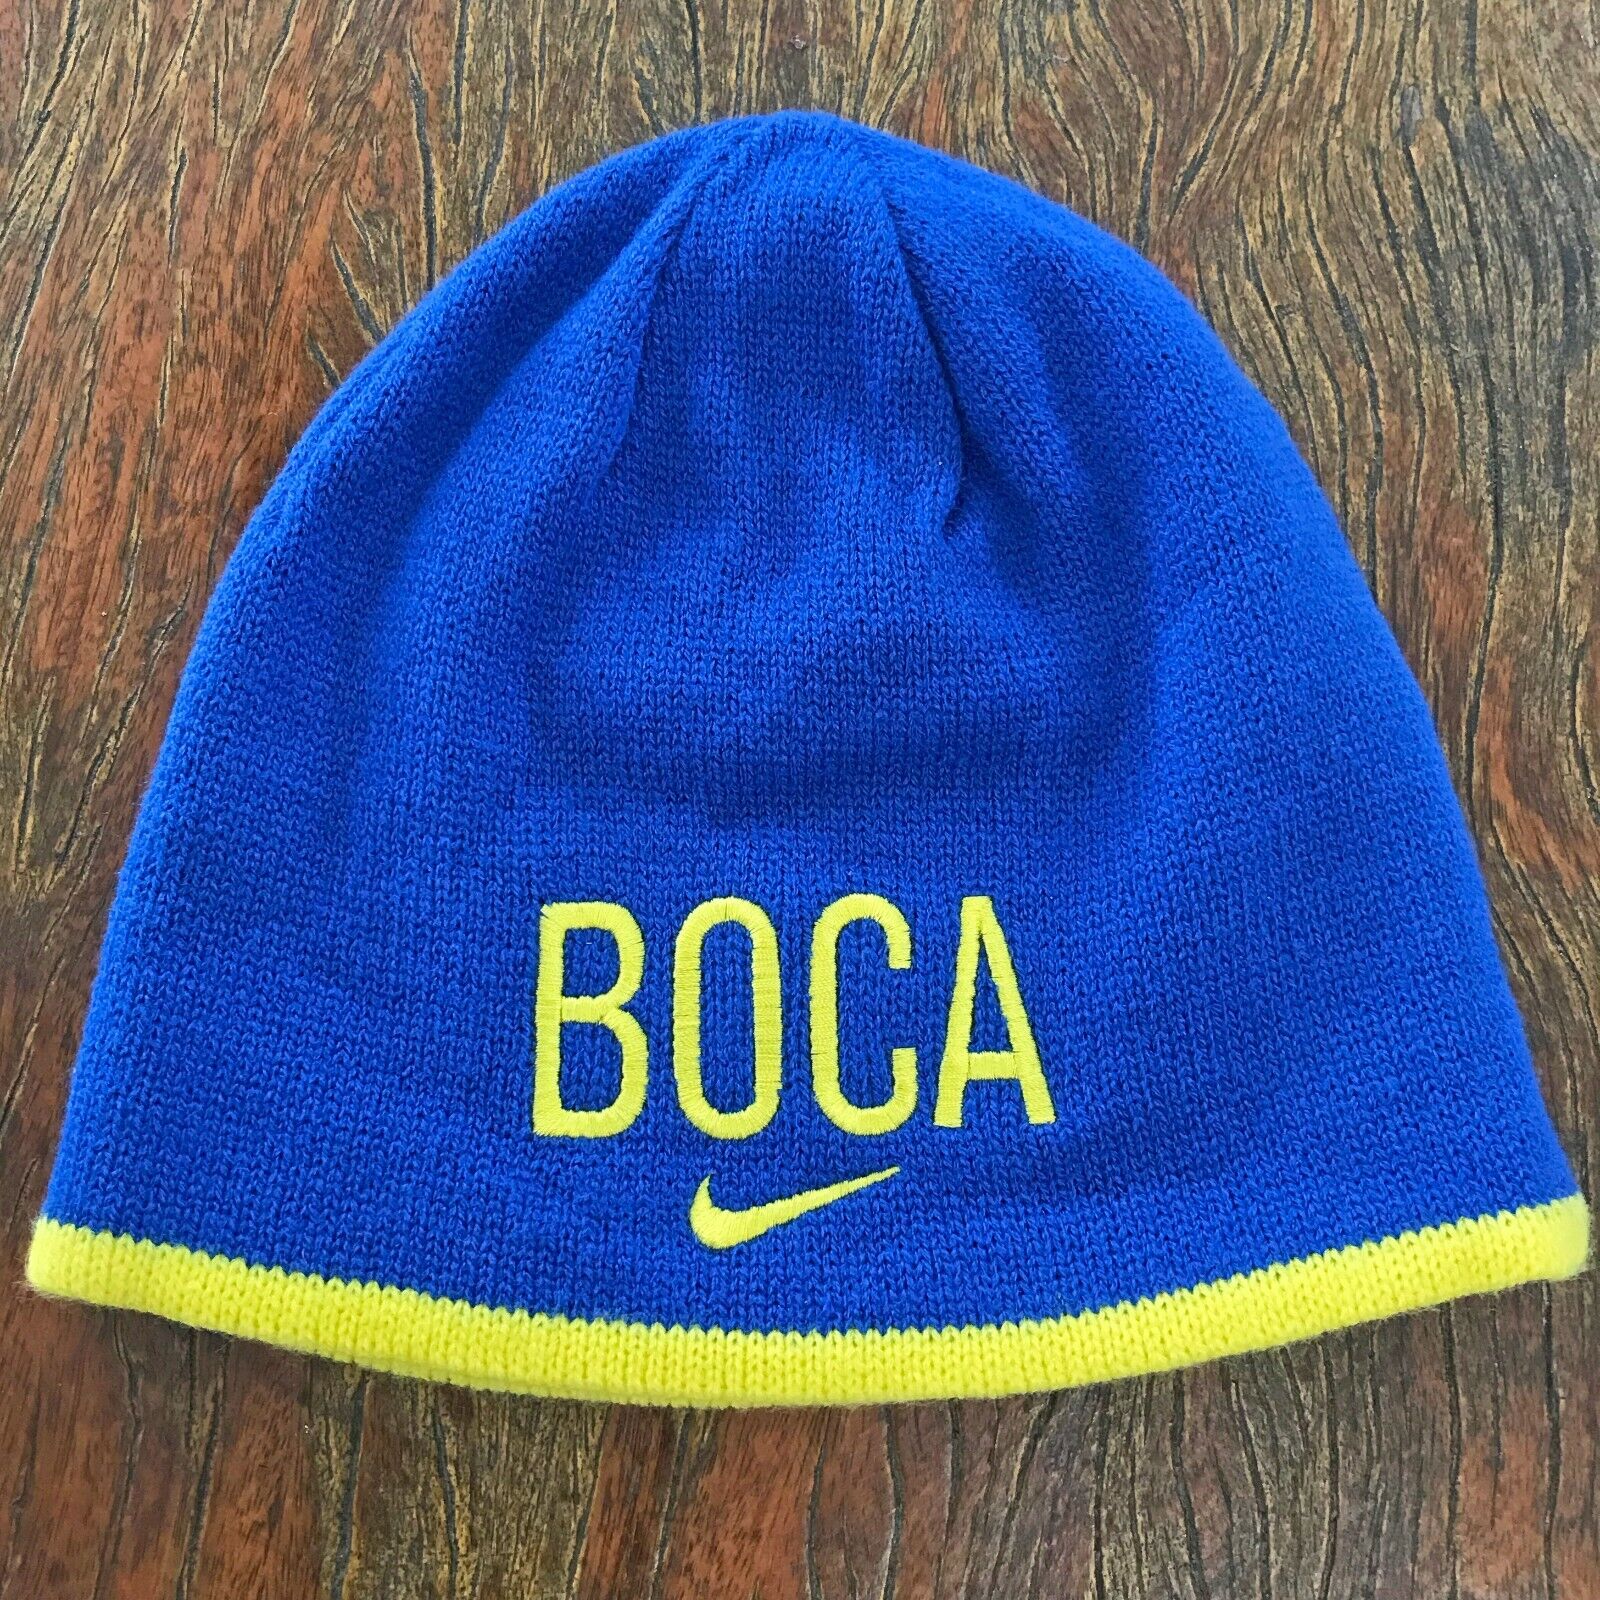 Boca Juniors Nike 2004 Official Team Players Beanie Hat. Carlos Tevez